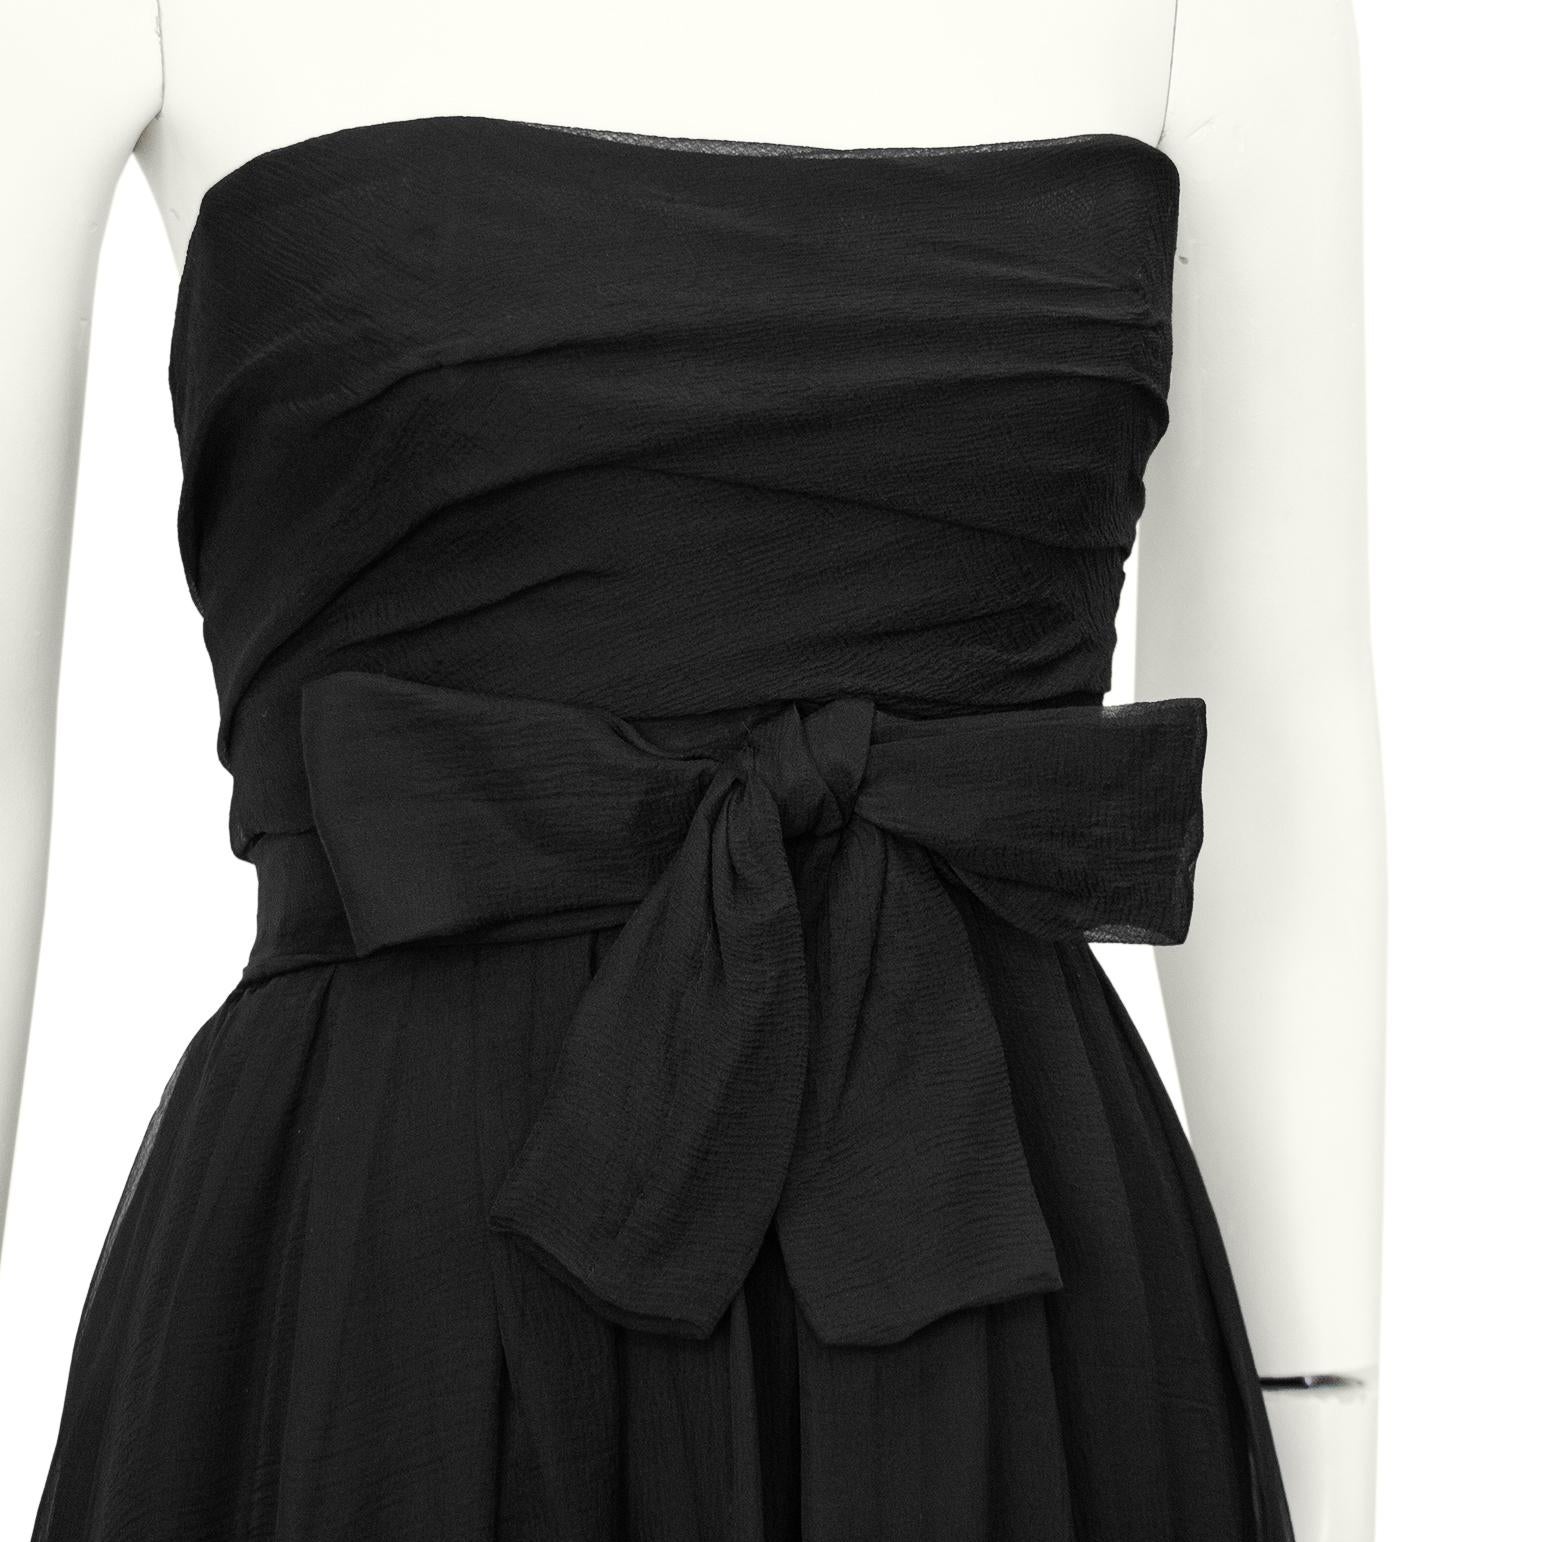 Autumn/Winter 1959 Christian Dior Couture Black Silk Chiffon 